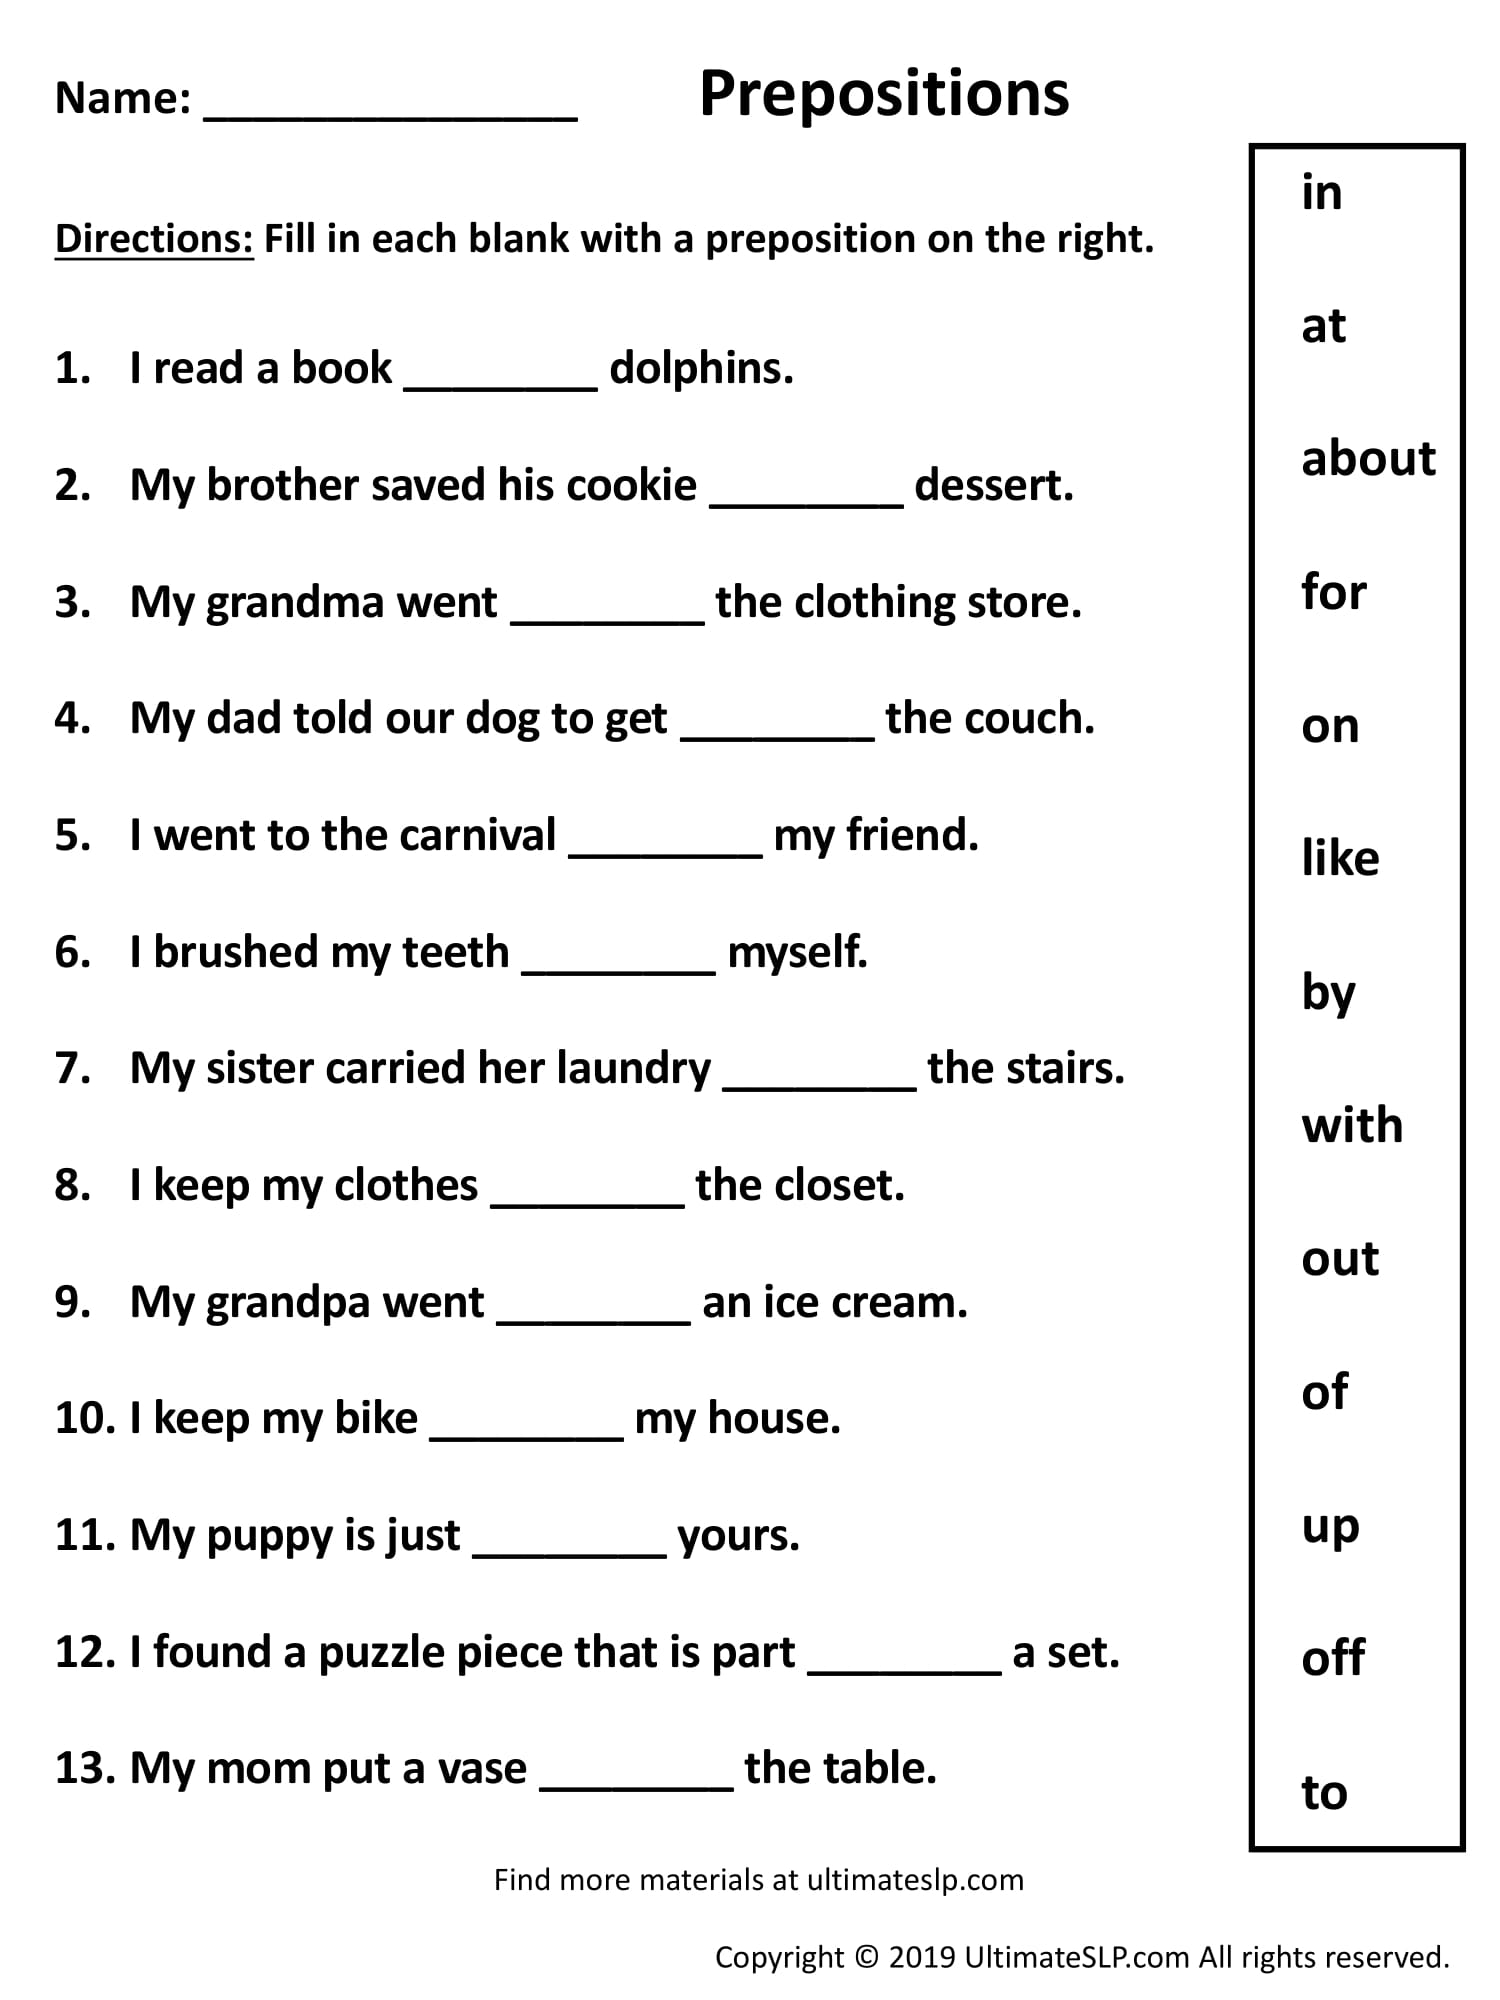 prepositions-worksheet-ultimate-slp